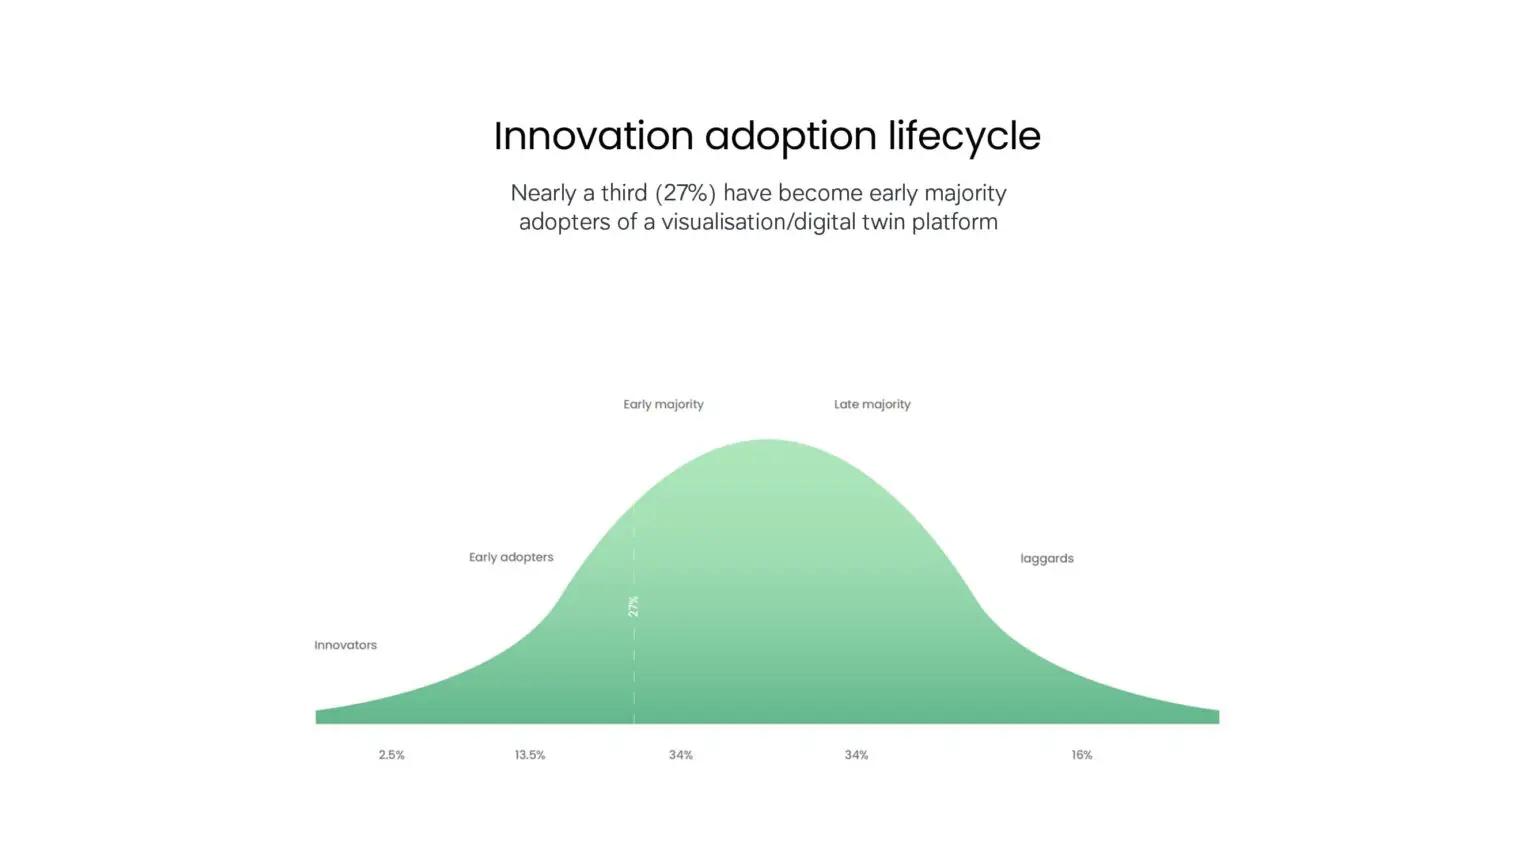 The adoption curve to visualisation